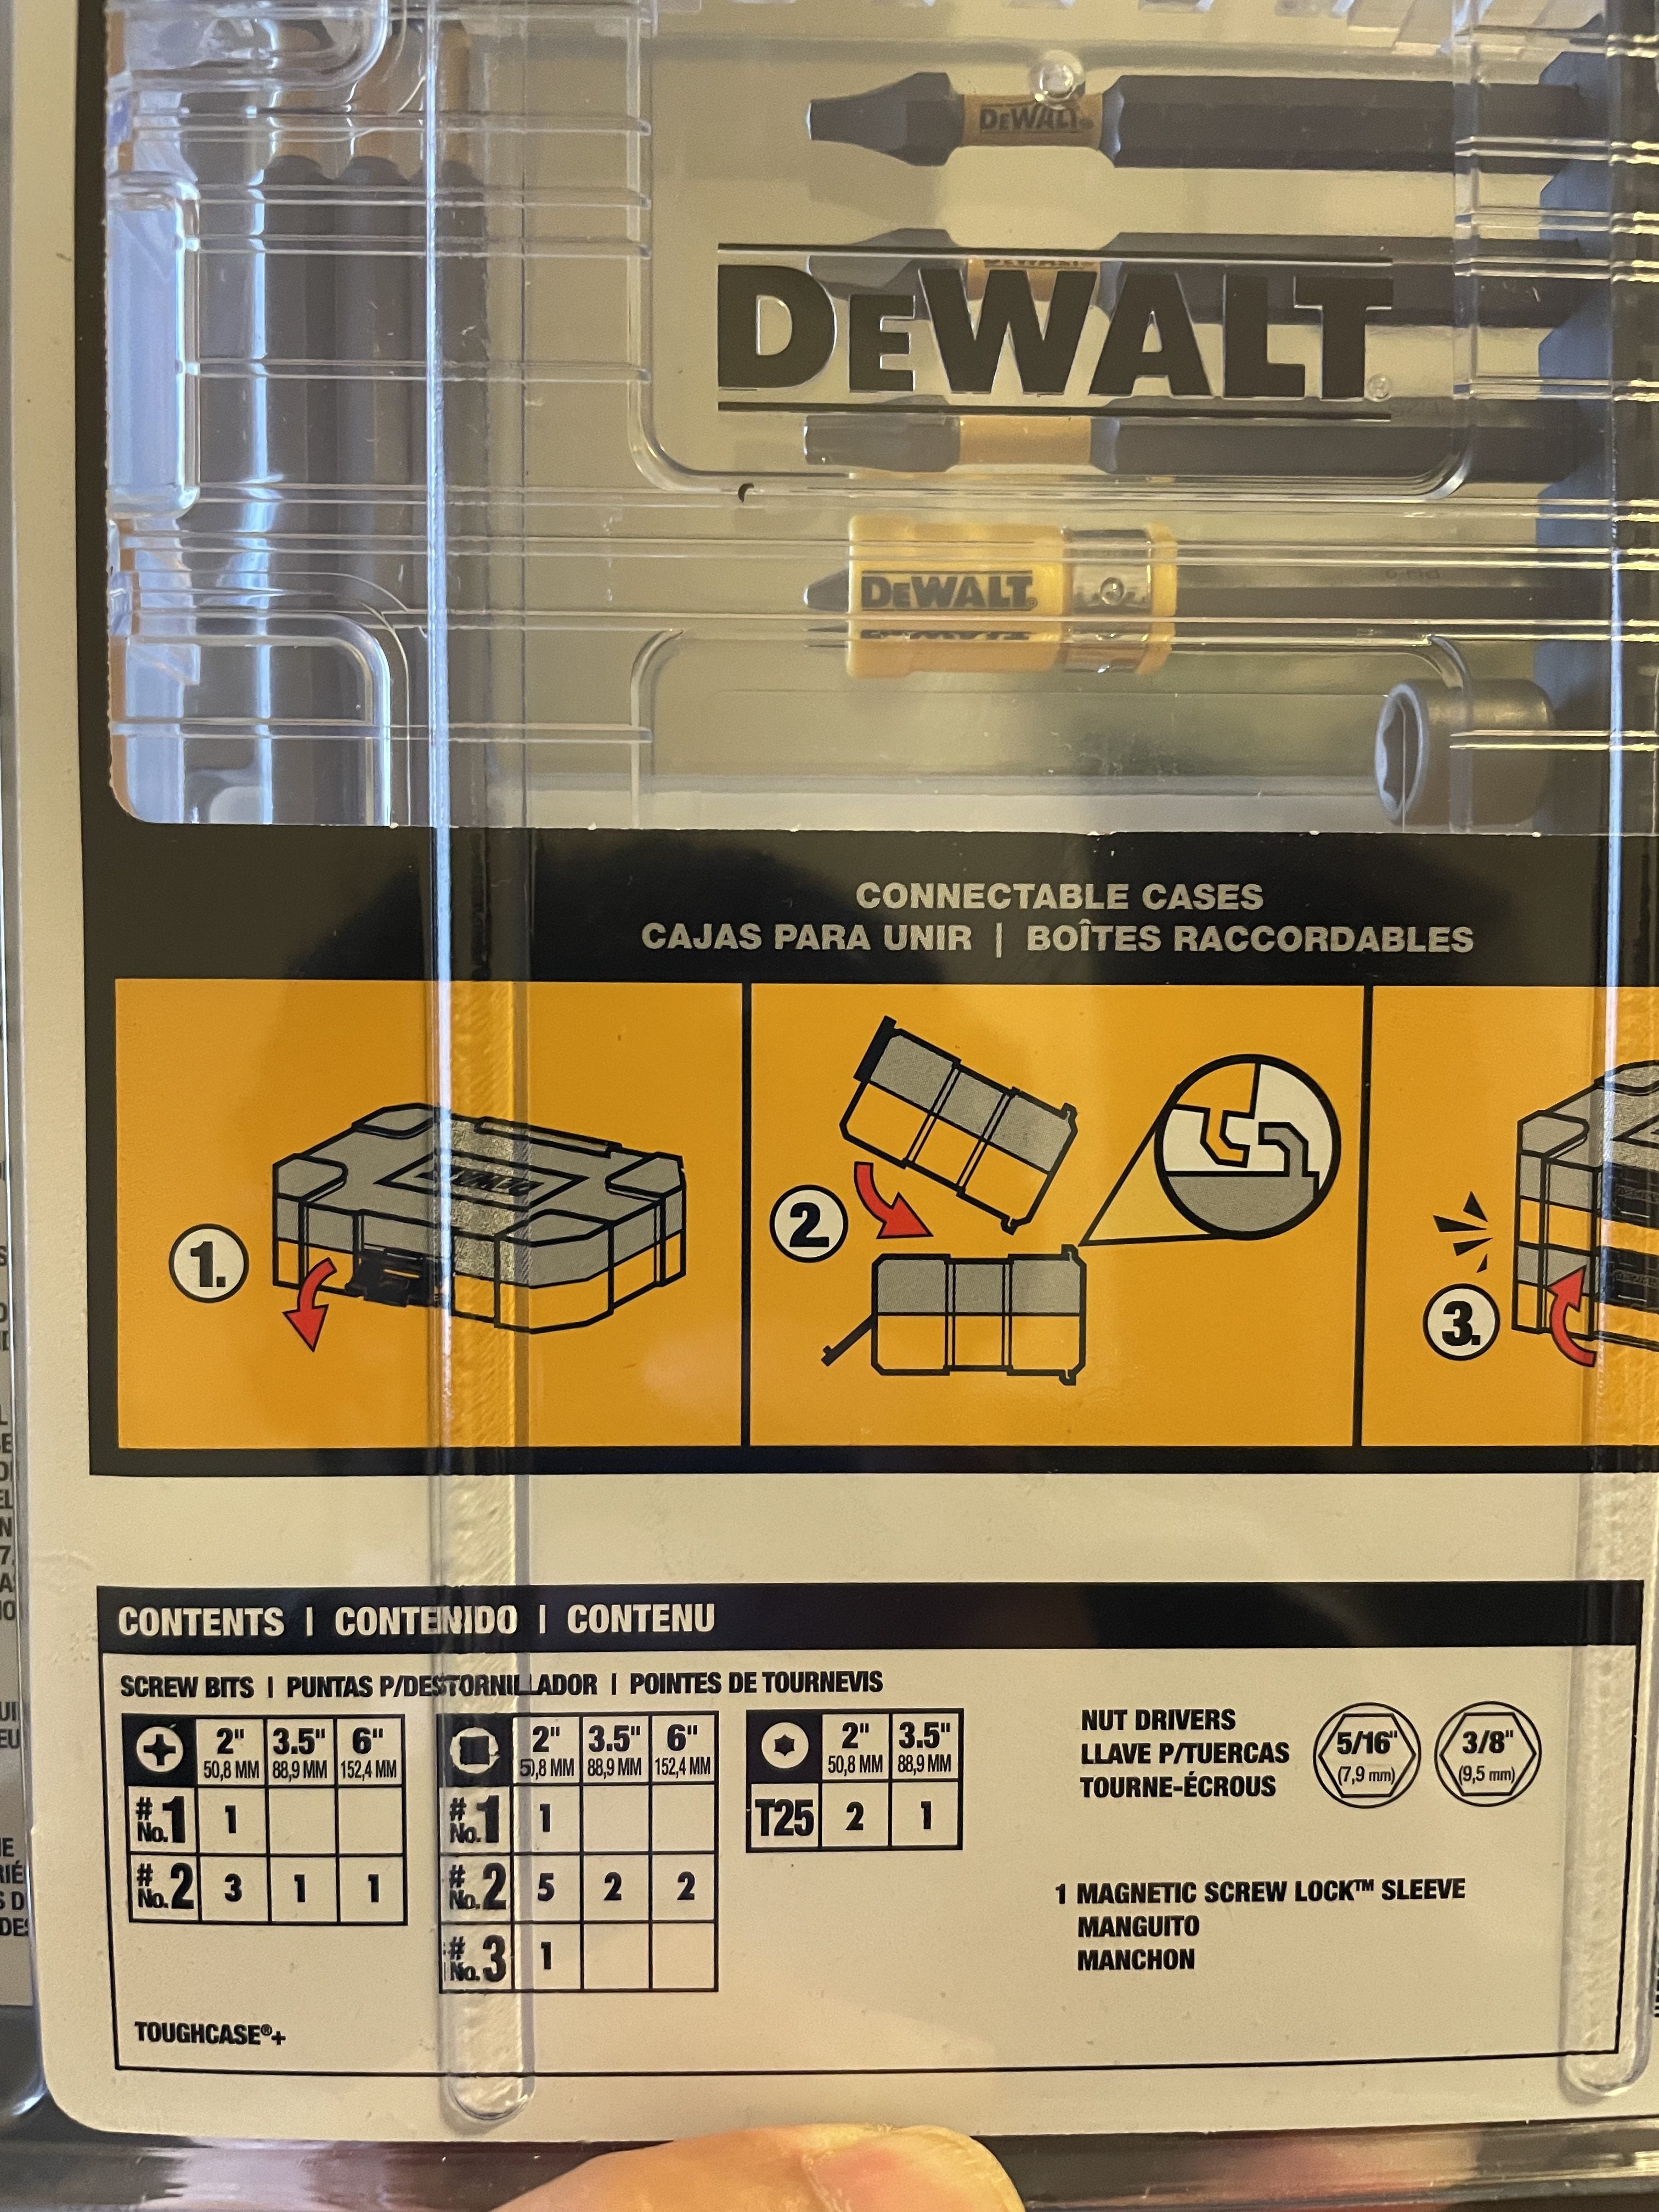 Home Depot] DEWALT MAXFIT Steel Screwdriving Set (23 Piece) $17.98 -  RedFlagDeals.com Forums